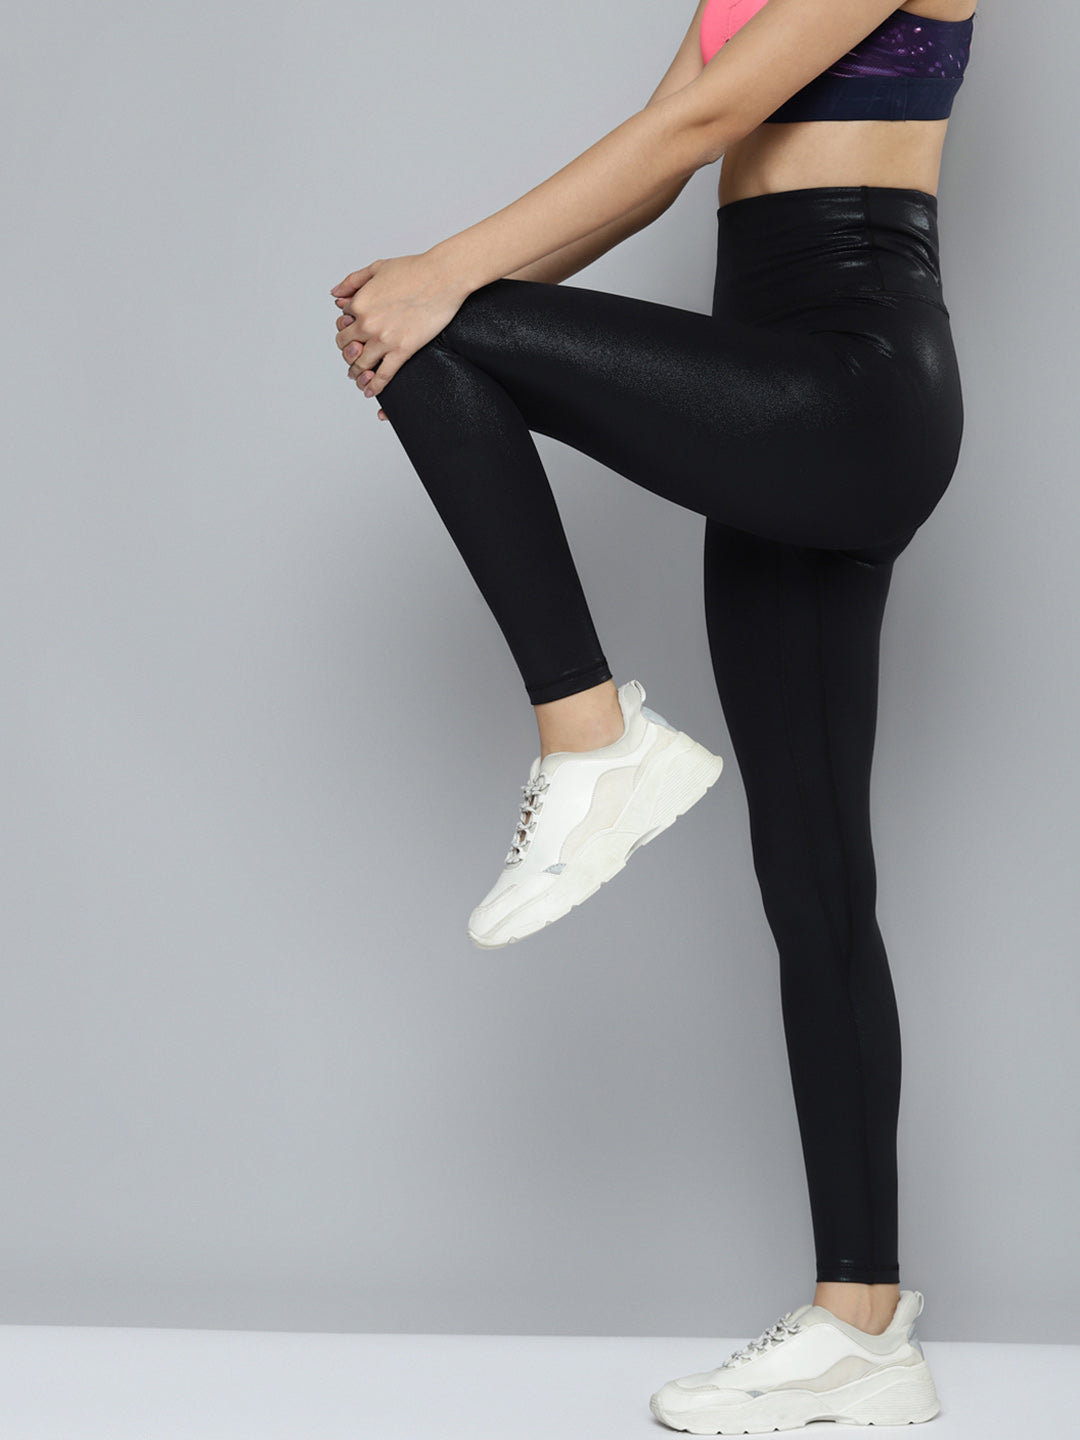 BROGBUS Cotton Ultra Soft Regular Wear Gym Leggings for Women Black,Size -L